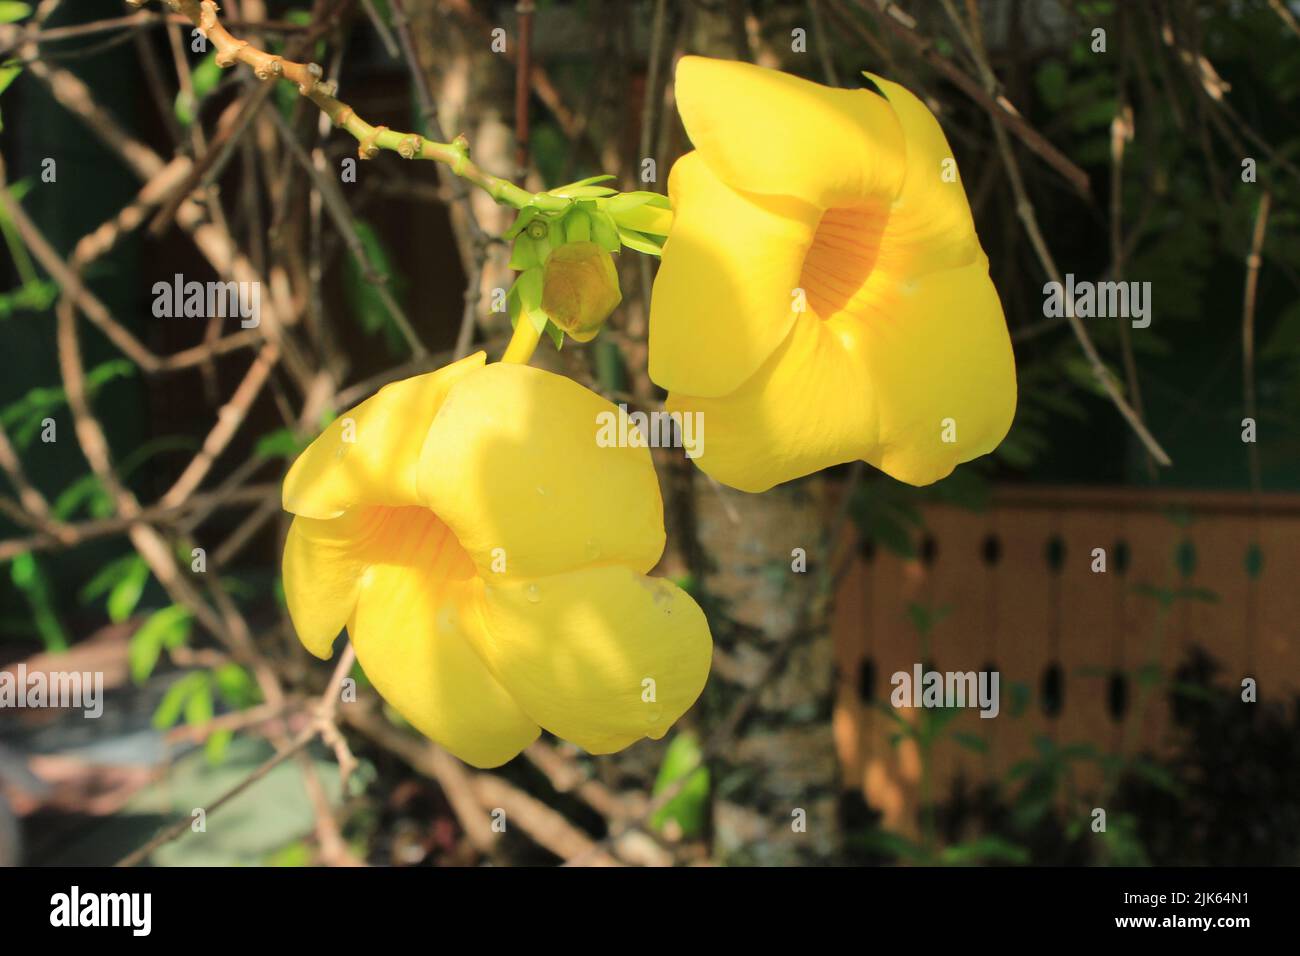 yellow buttercup flower or Alamanda or allamanda flower. Beautiful yellow flowers that are in bloom Stock Photo